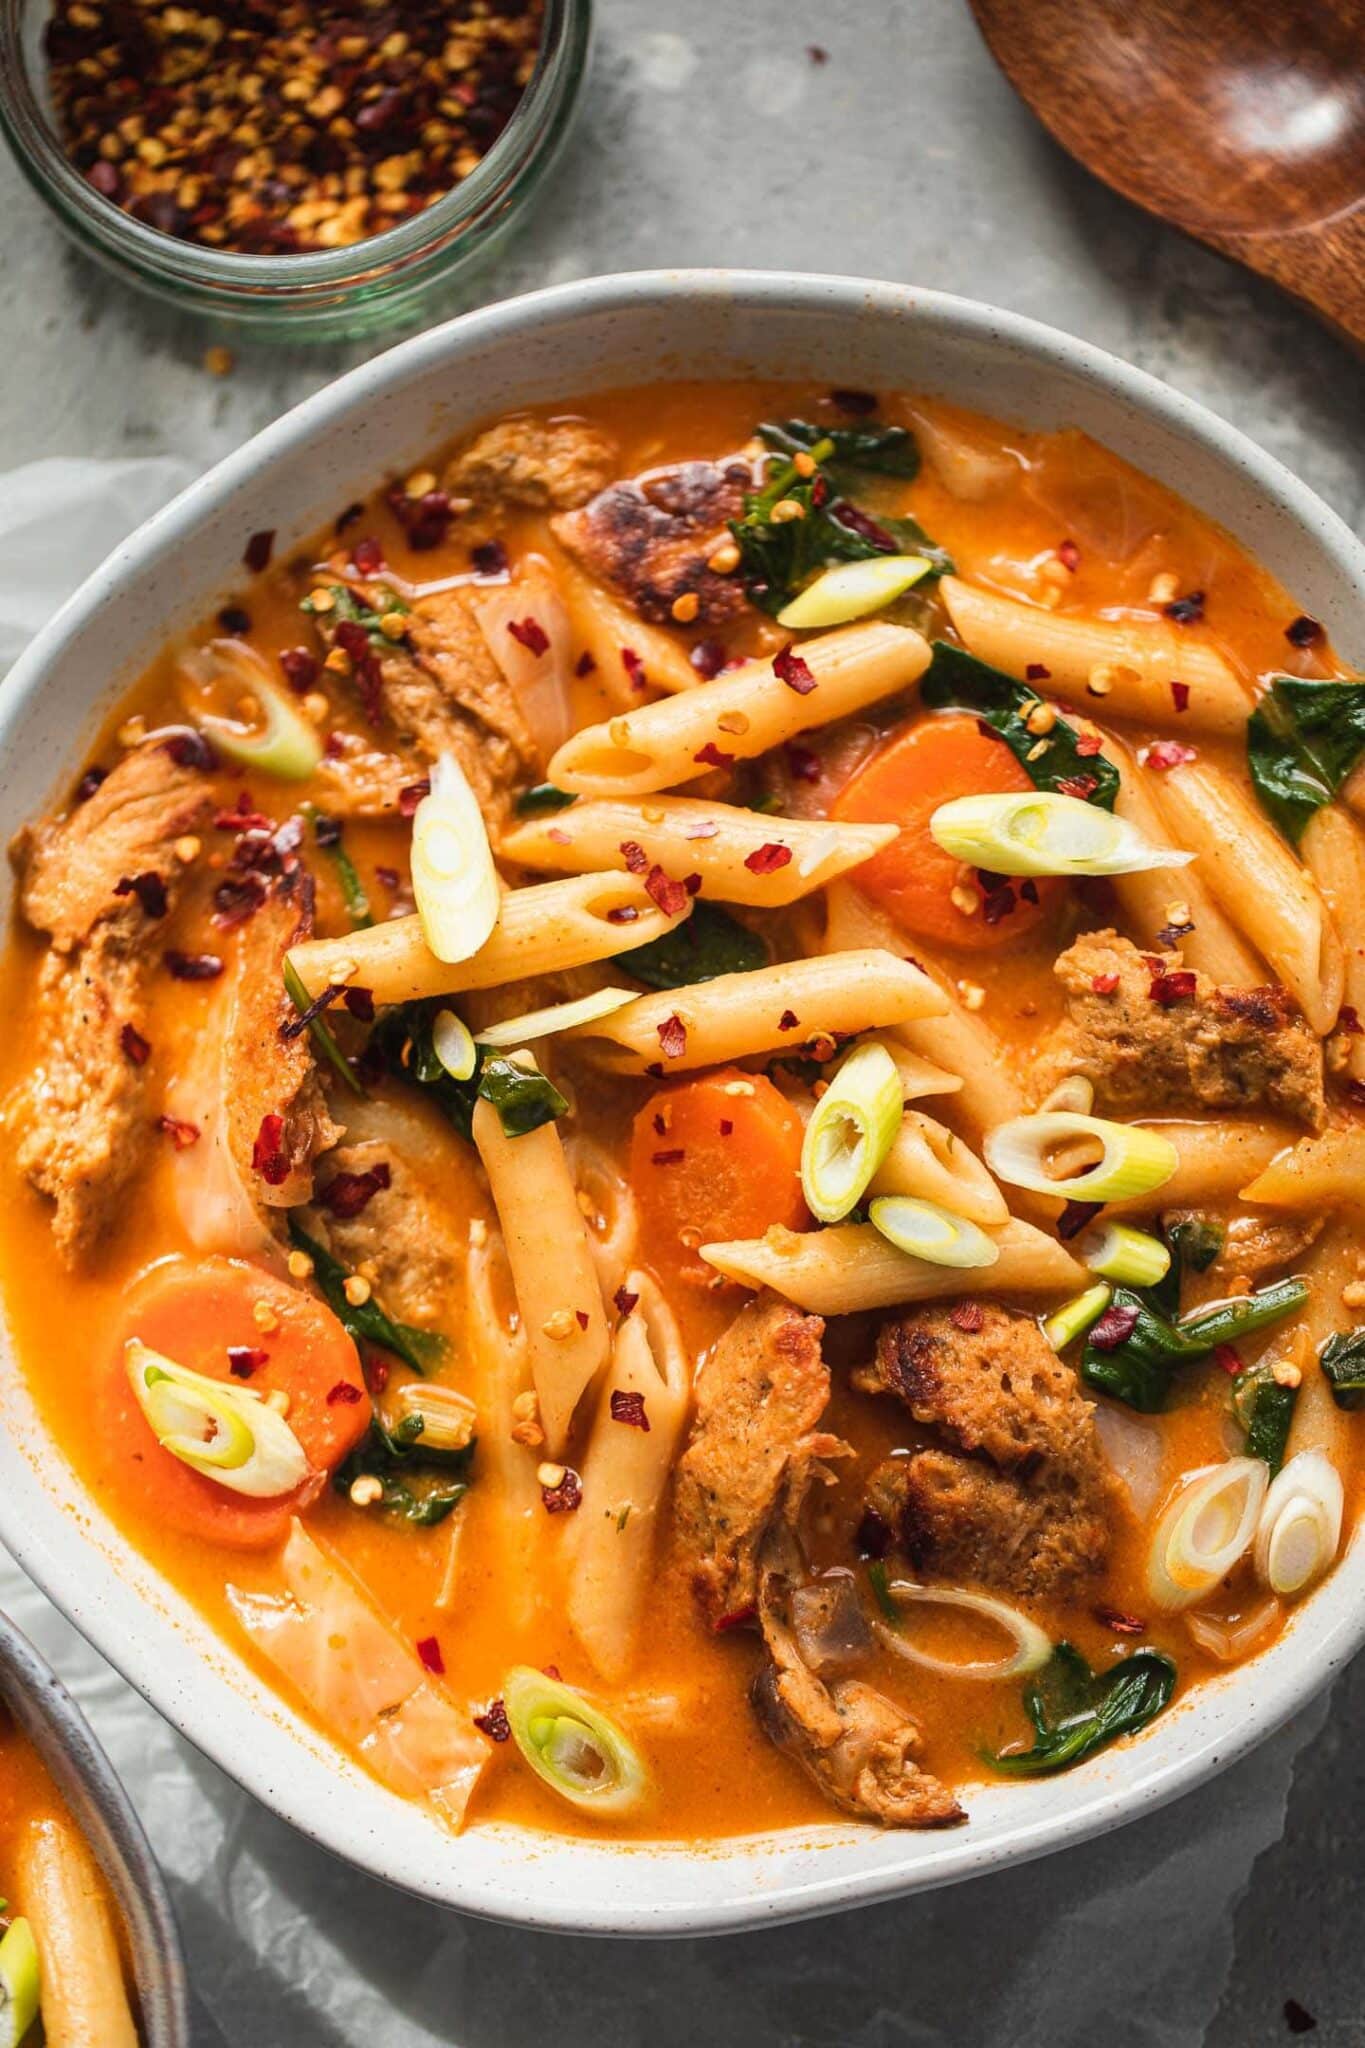 https://ohmyveggies.com/wp-content/uploads/2021/04/Vegan-chicken-noodle-soup-recipe-8-scaled.jpg